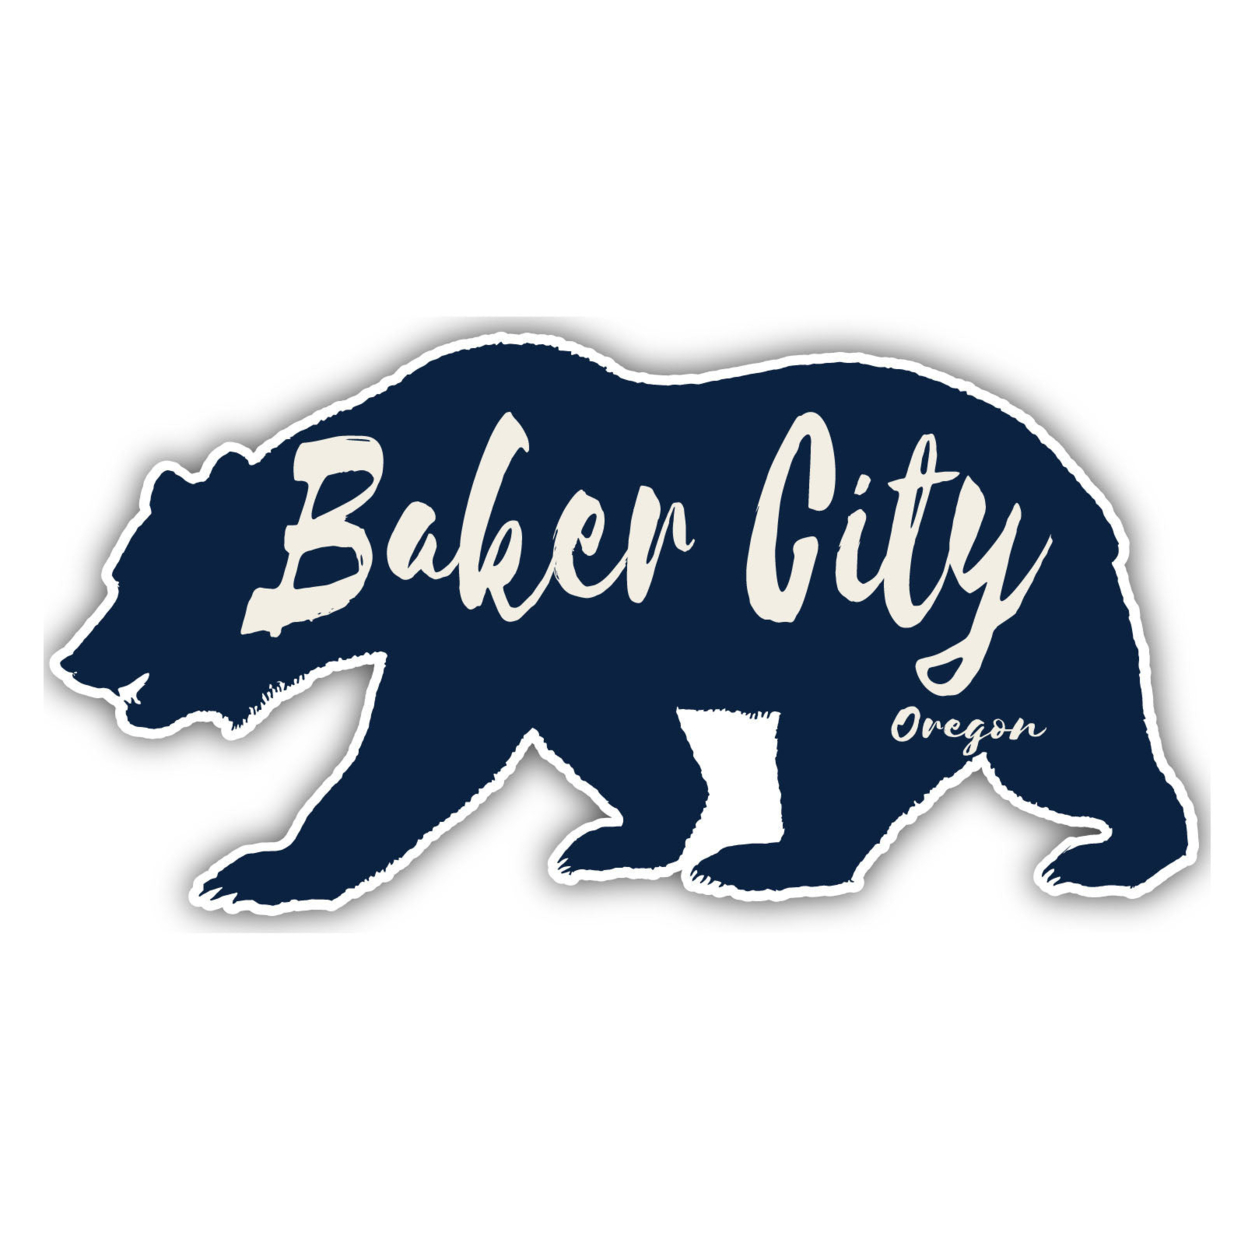 Baker City Oregon Souvenir Decorative Stickers (Choose Theme And Size) - 4-Pack, 2-Inch, Bear